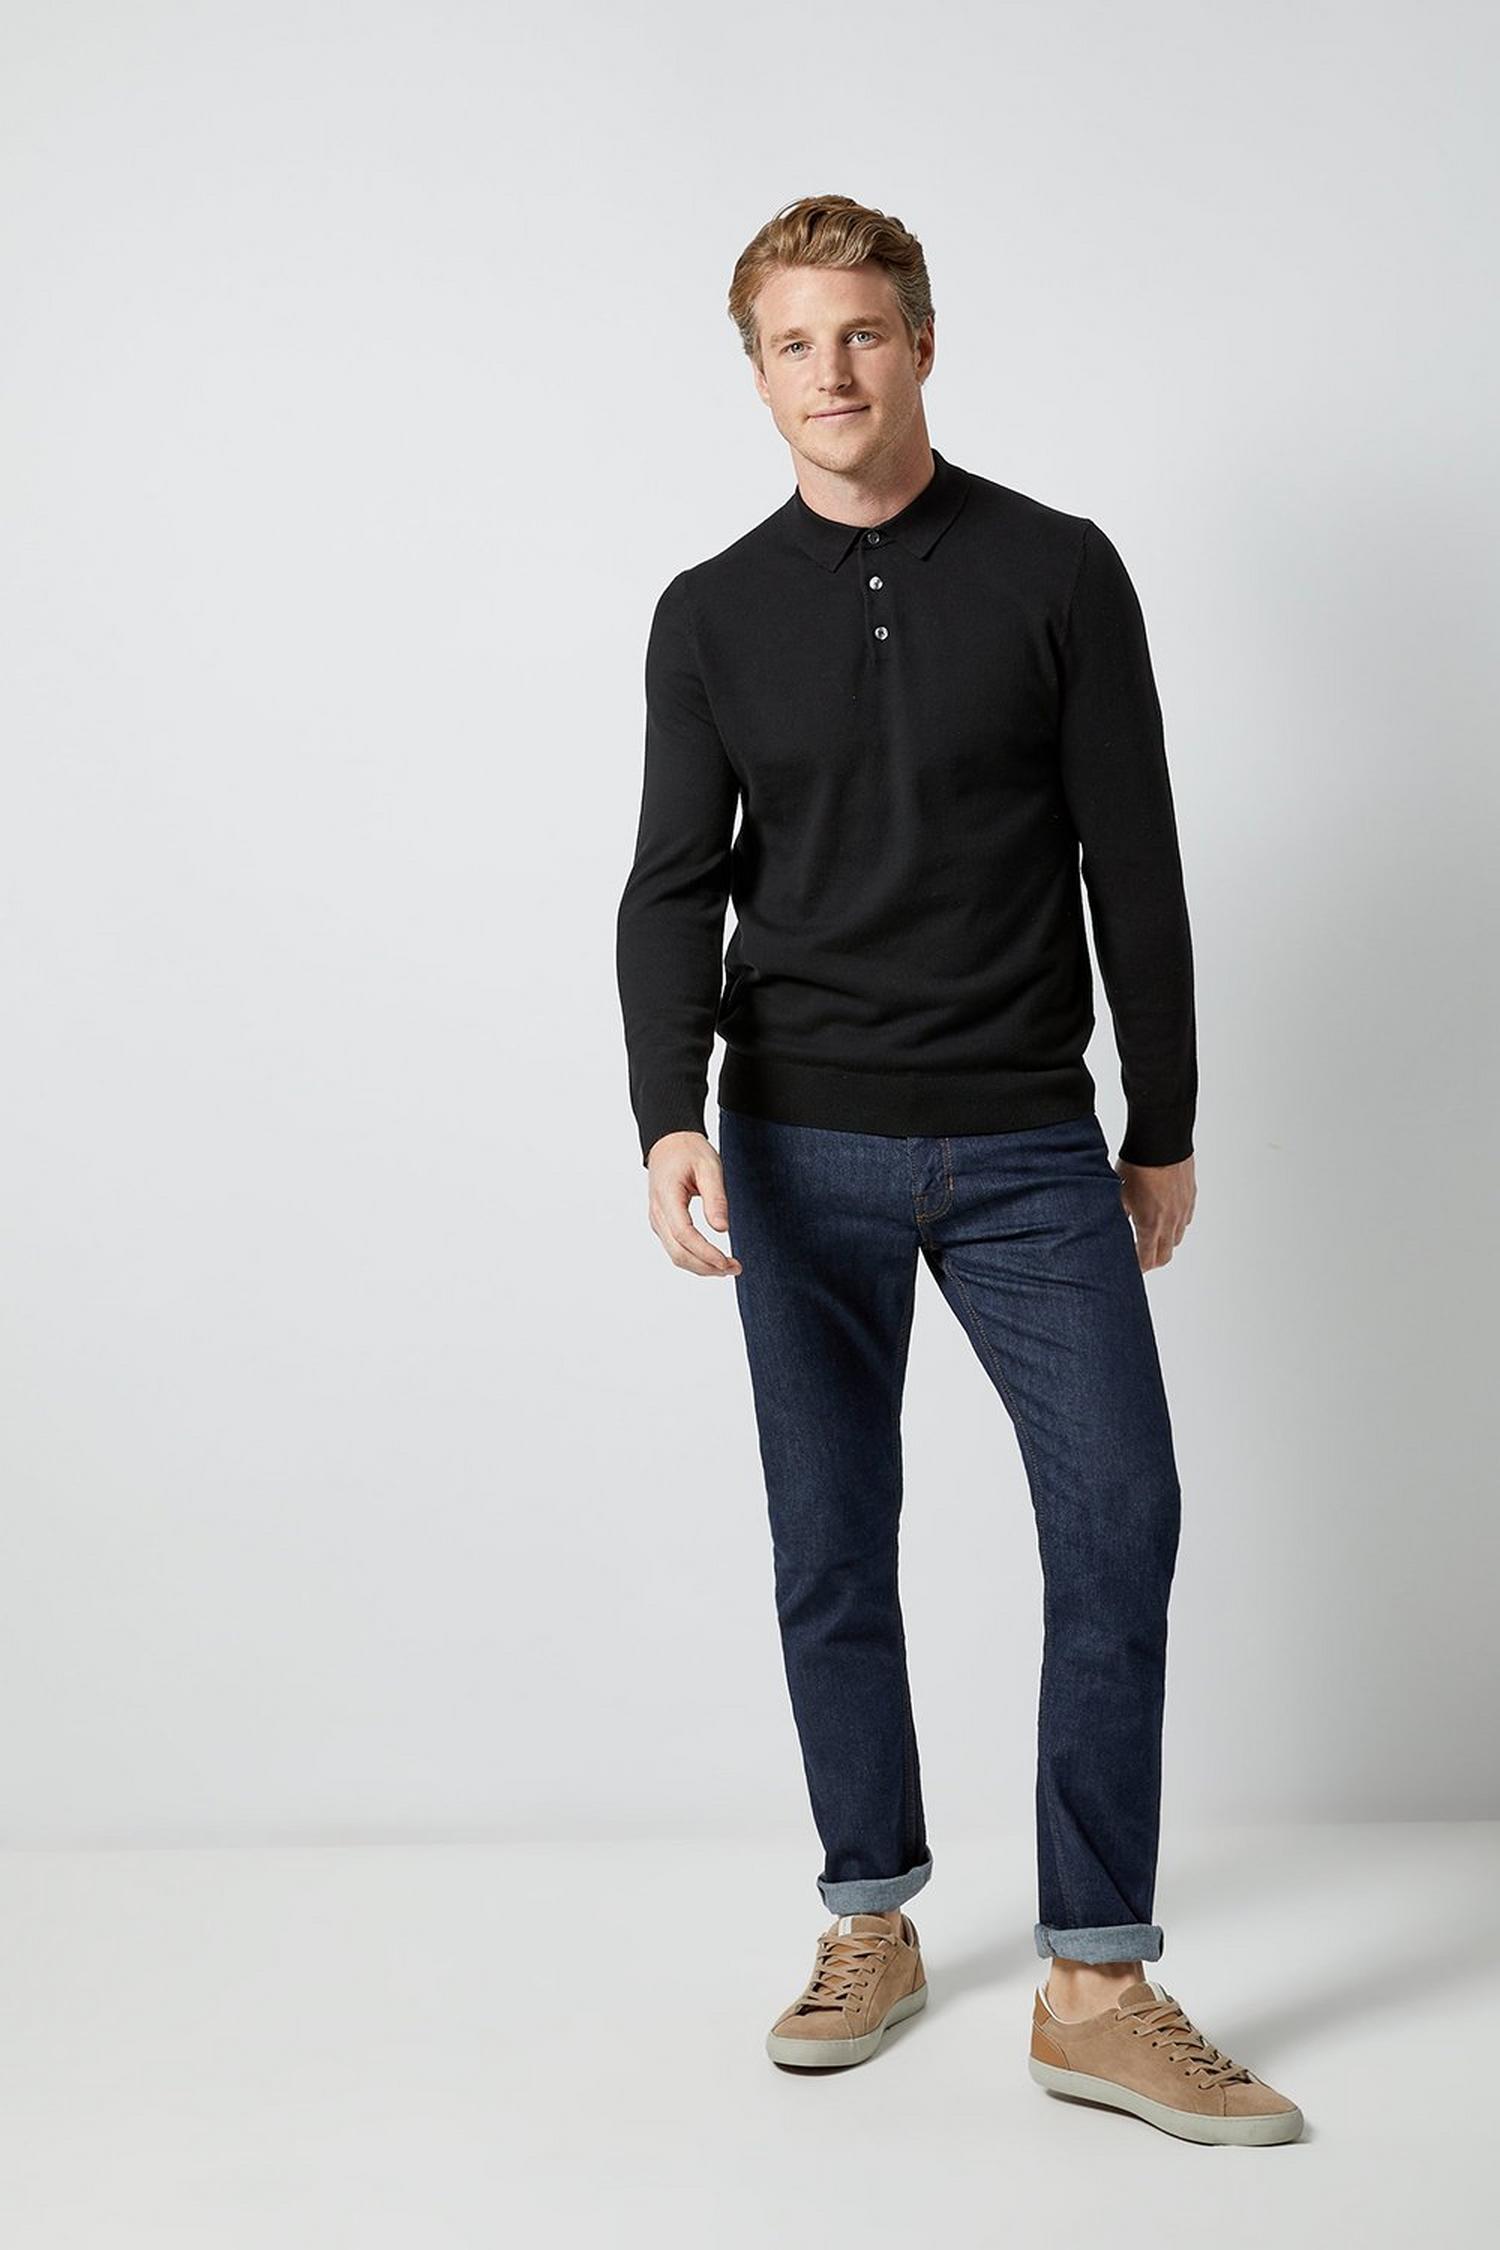 Black Twist Knitted Polo Shirt | Burton UK